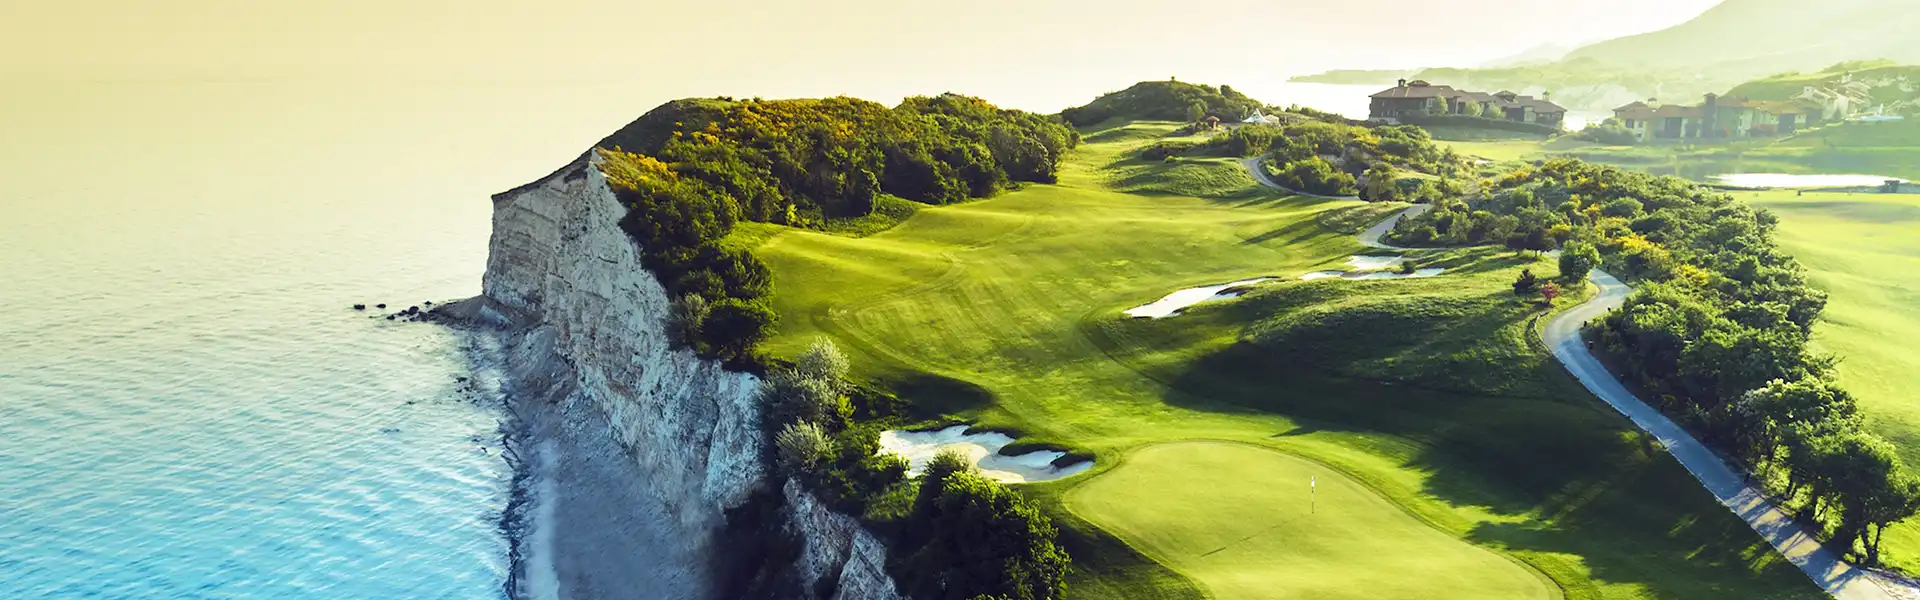 Bilyana Golf - Signature Course